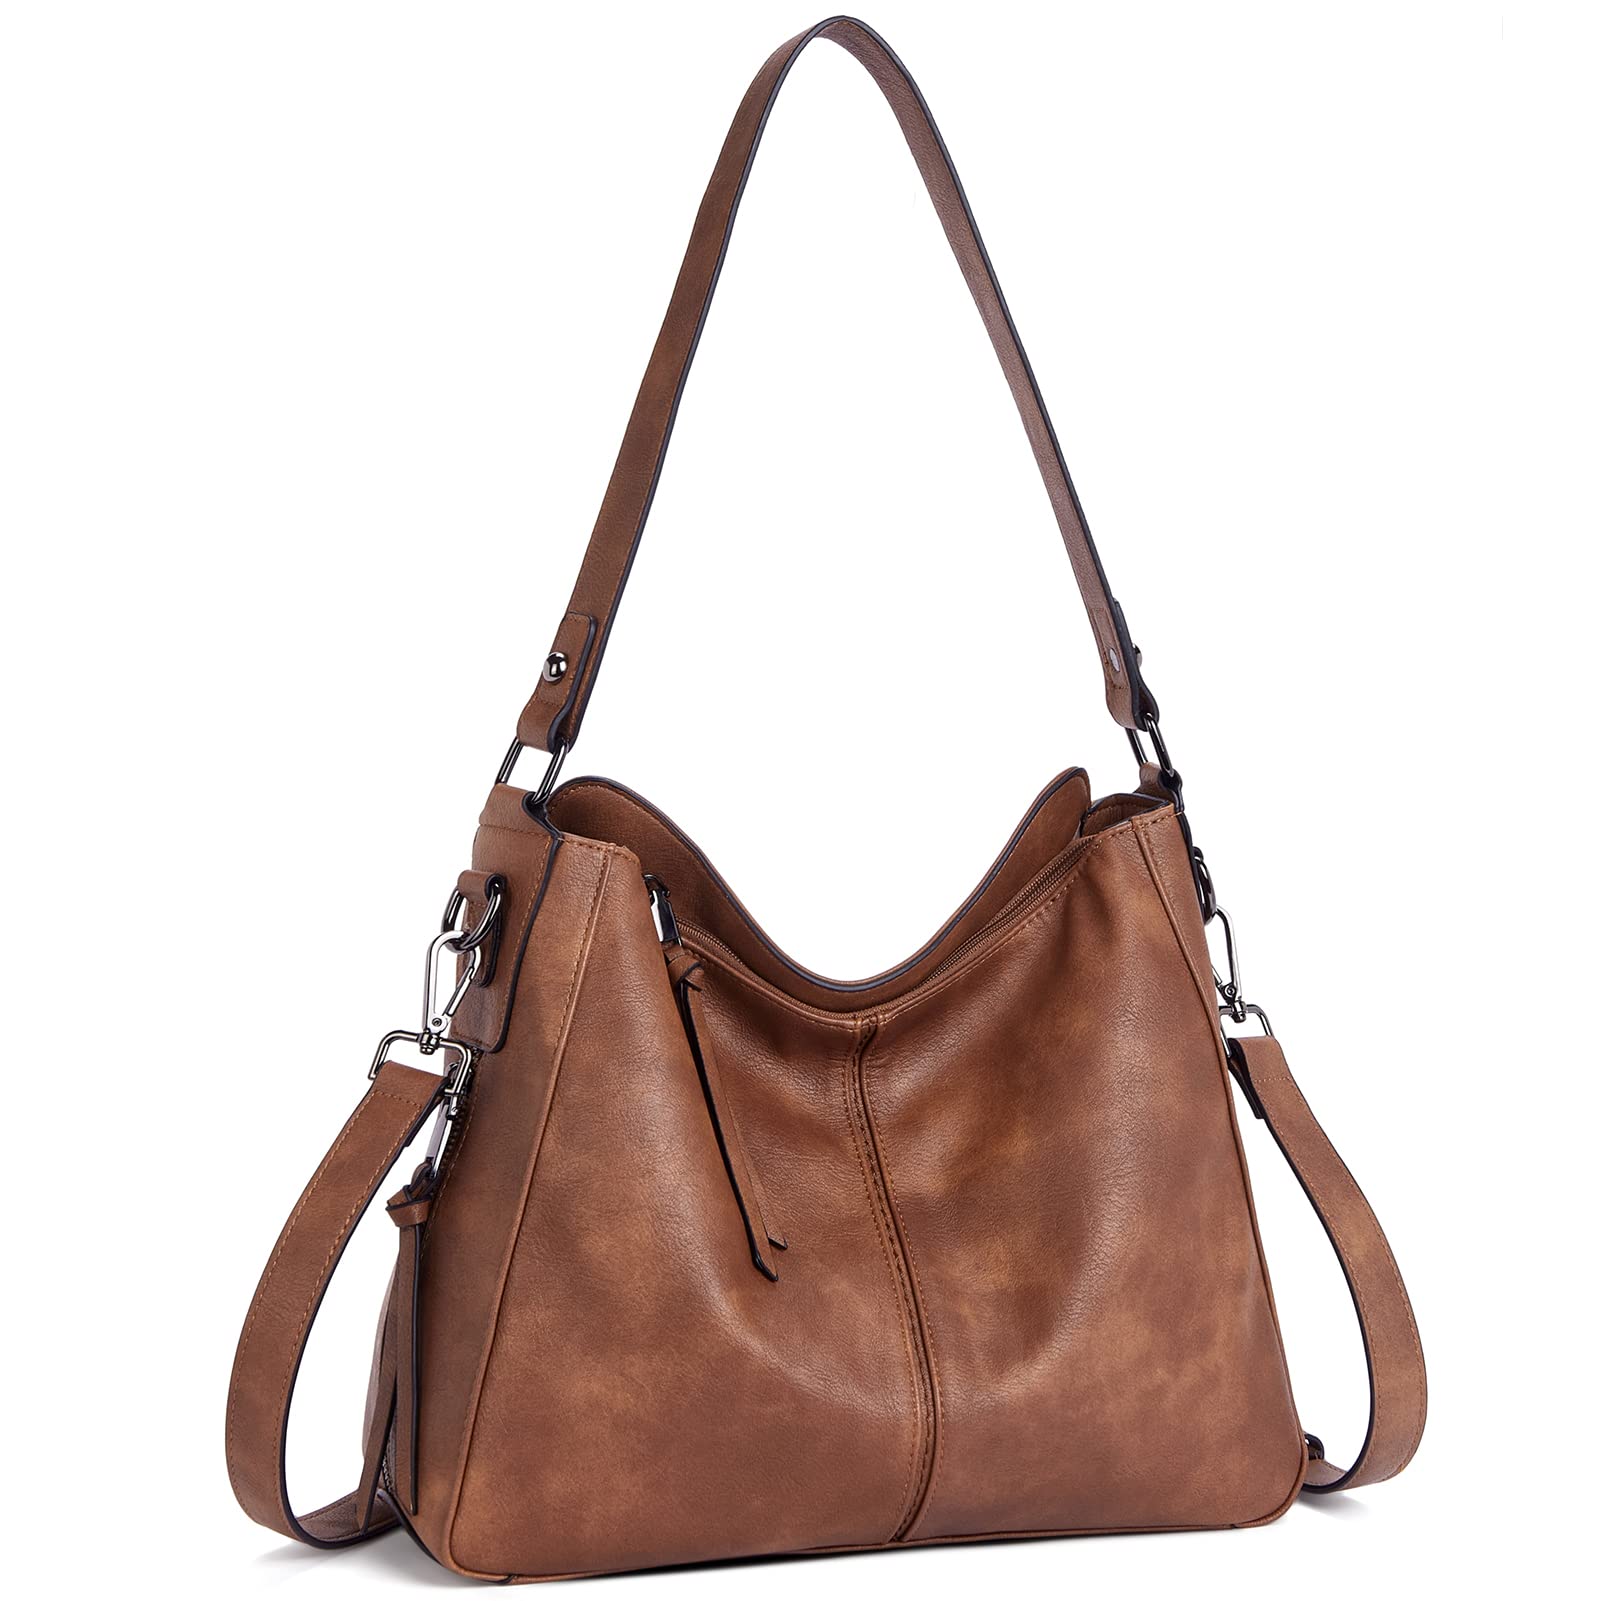 BOSTANTEN Purses for Women Designer Leather Handbags Hobo Bags Ladies Shoulder Crossbody Bags with Tassel